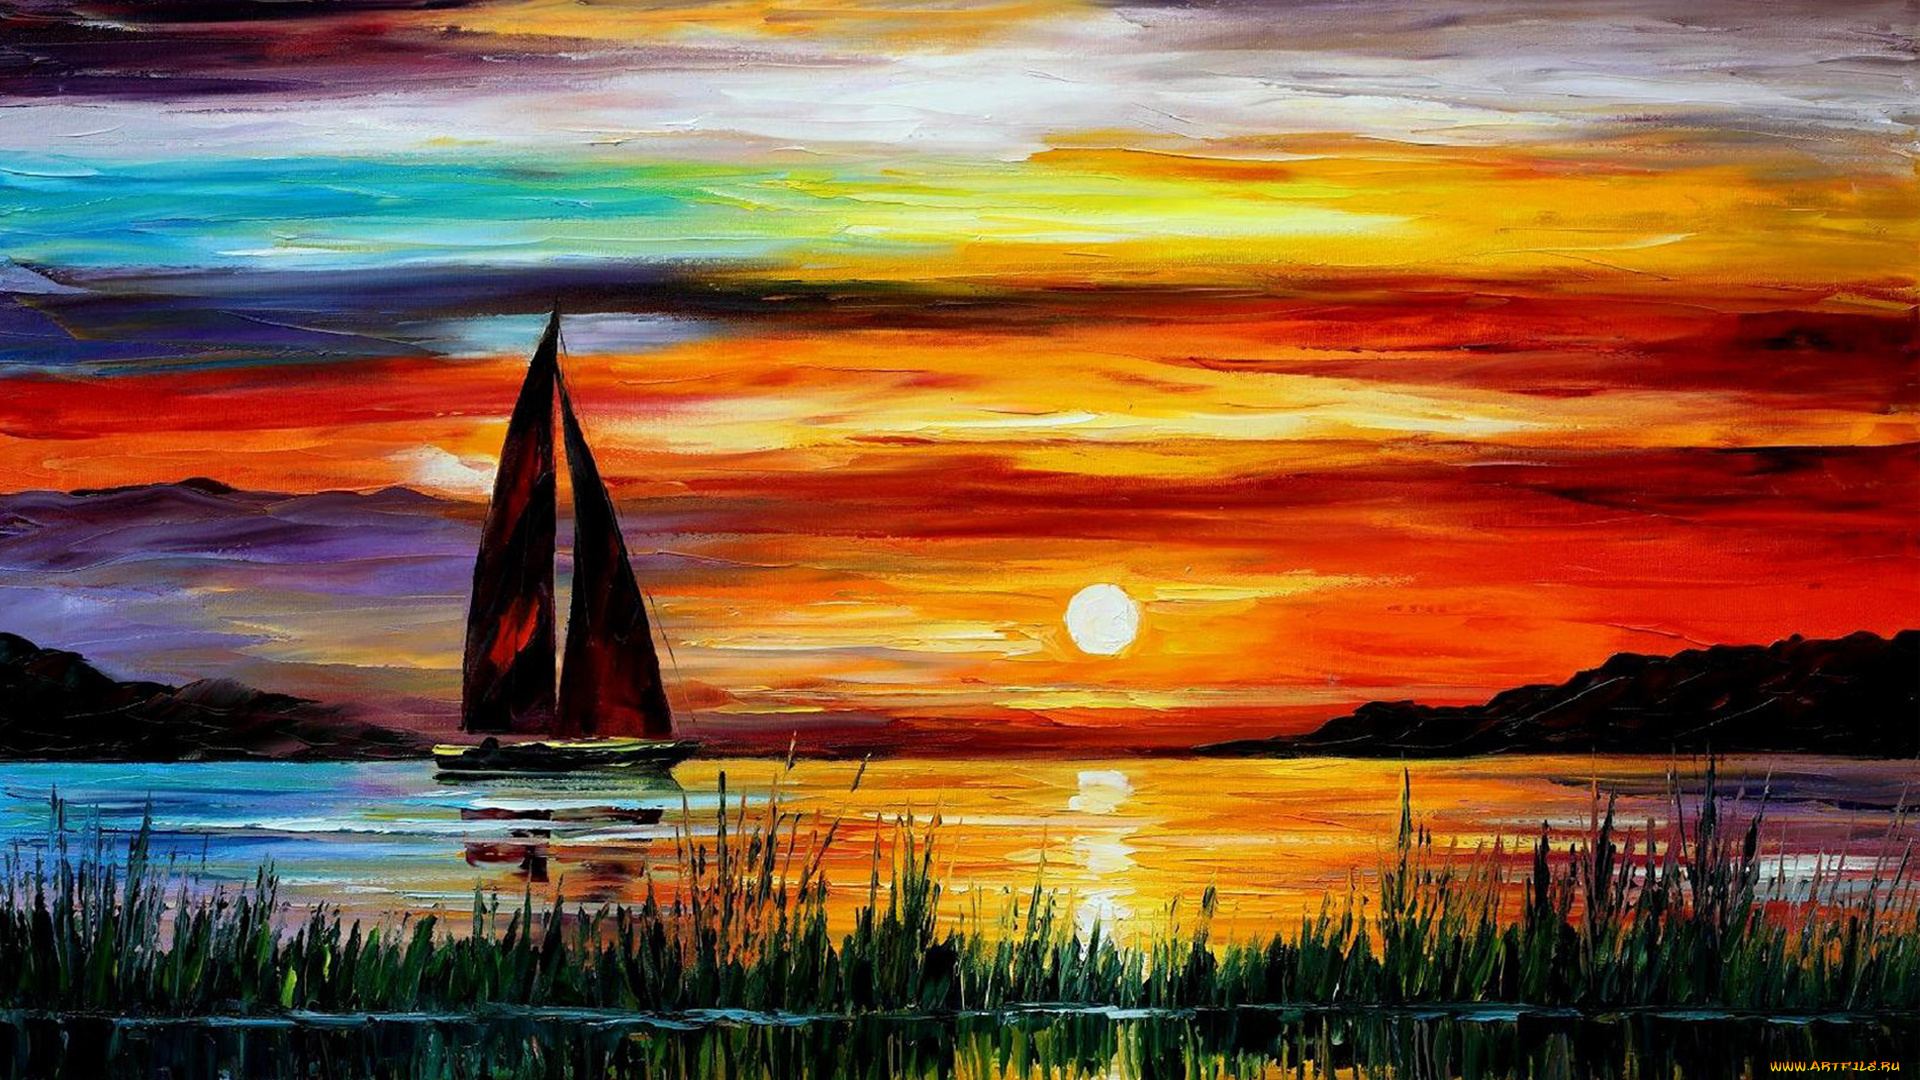 рисованное, живопись, солнце, тучи, закат, парус, лодка, небо, камыш, вода